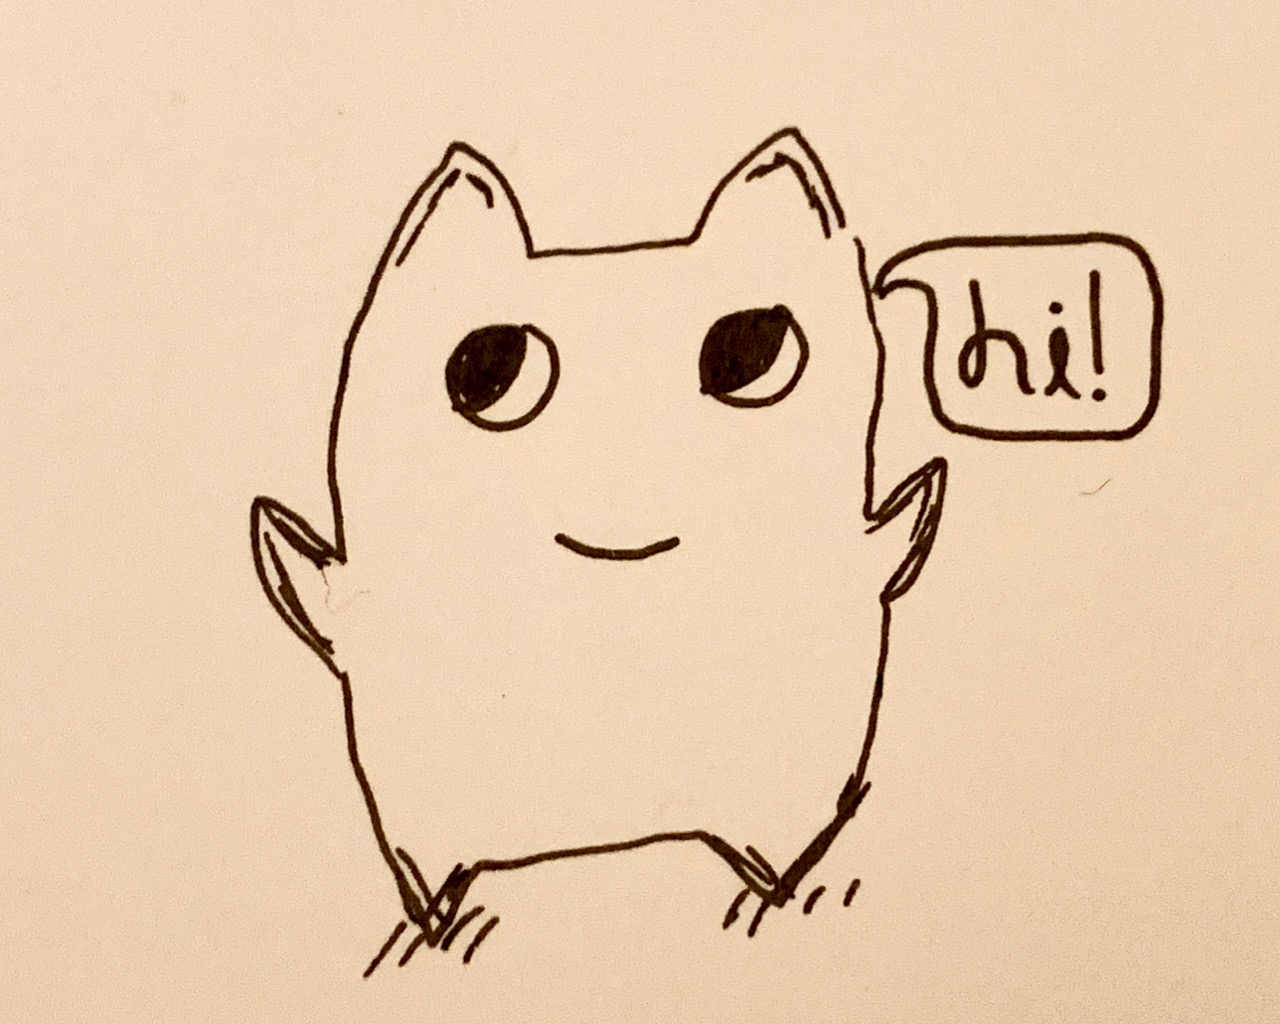 Owl says hi